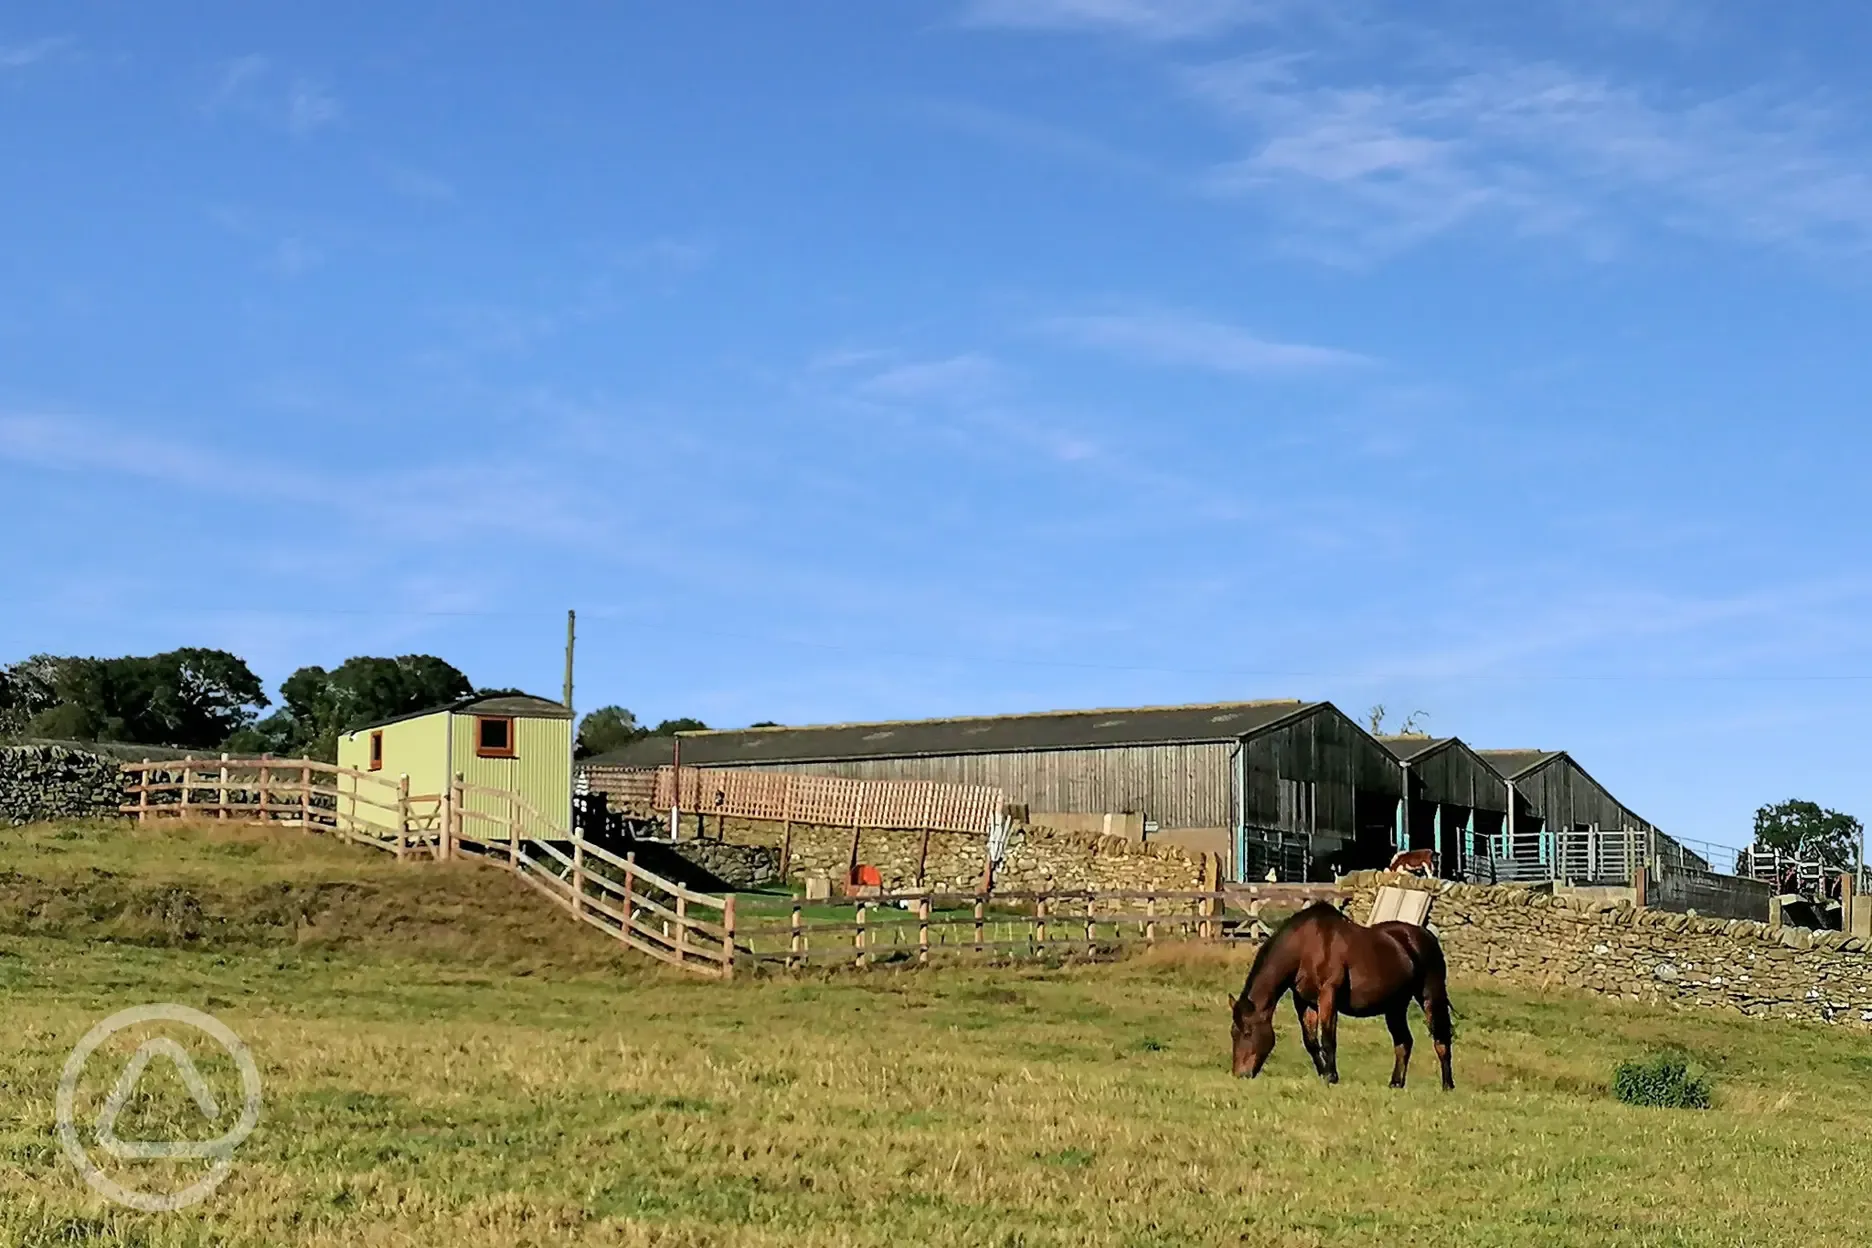 Shepherd's Hut with guest horses